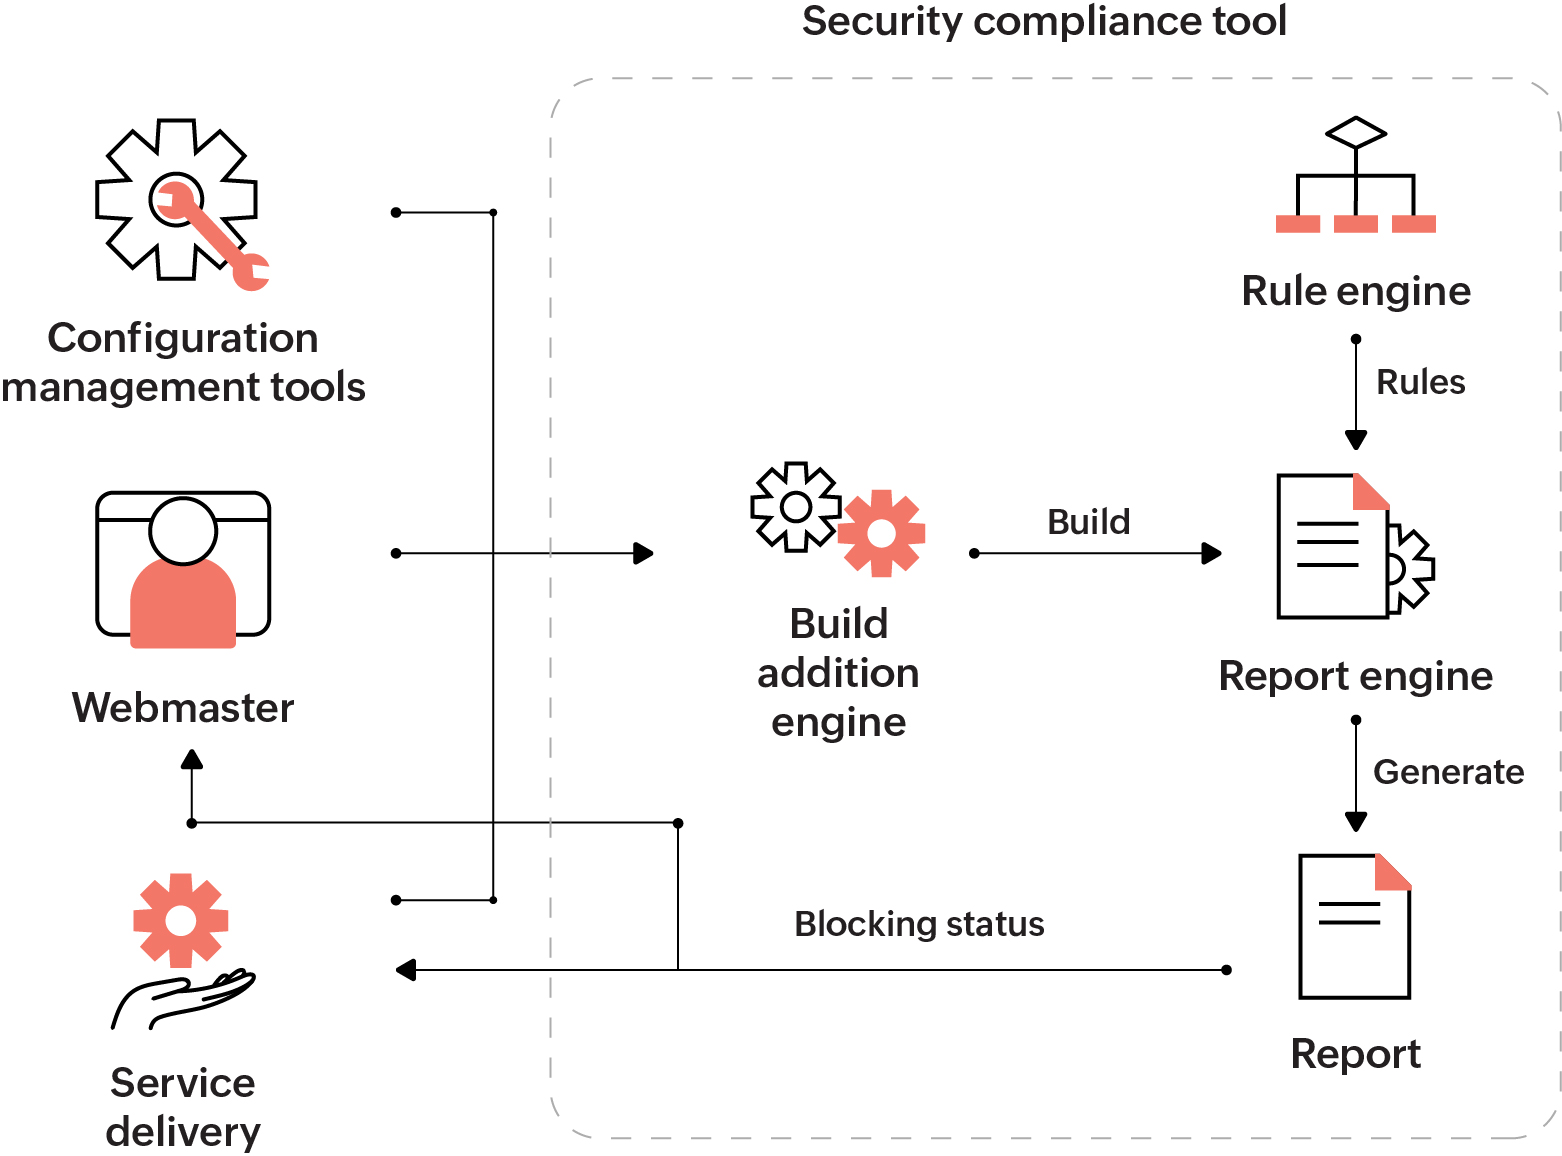 Security compliance tool framework